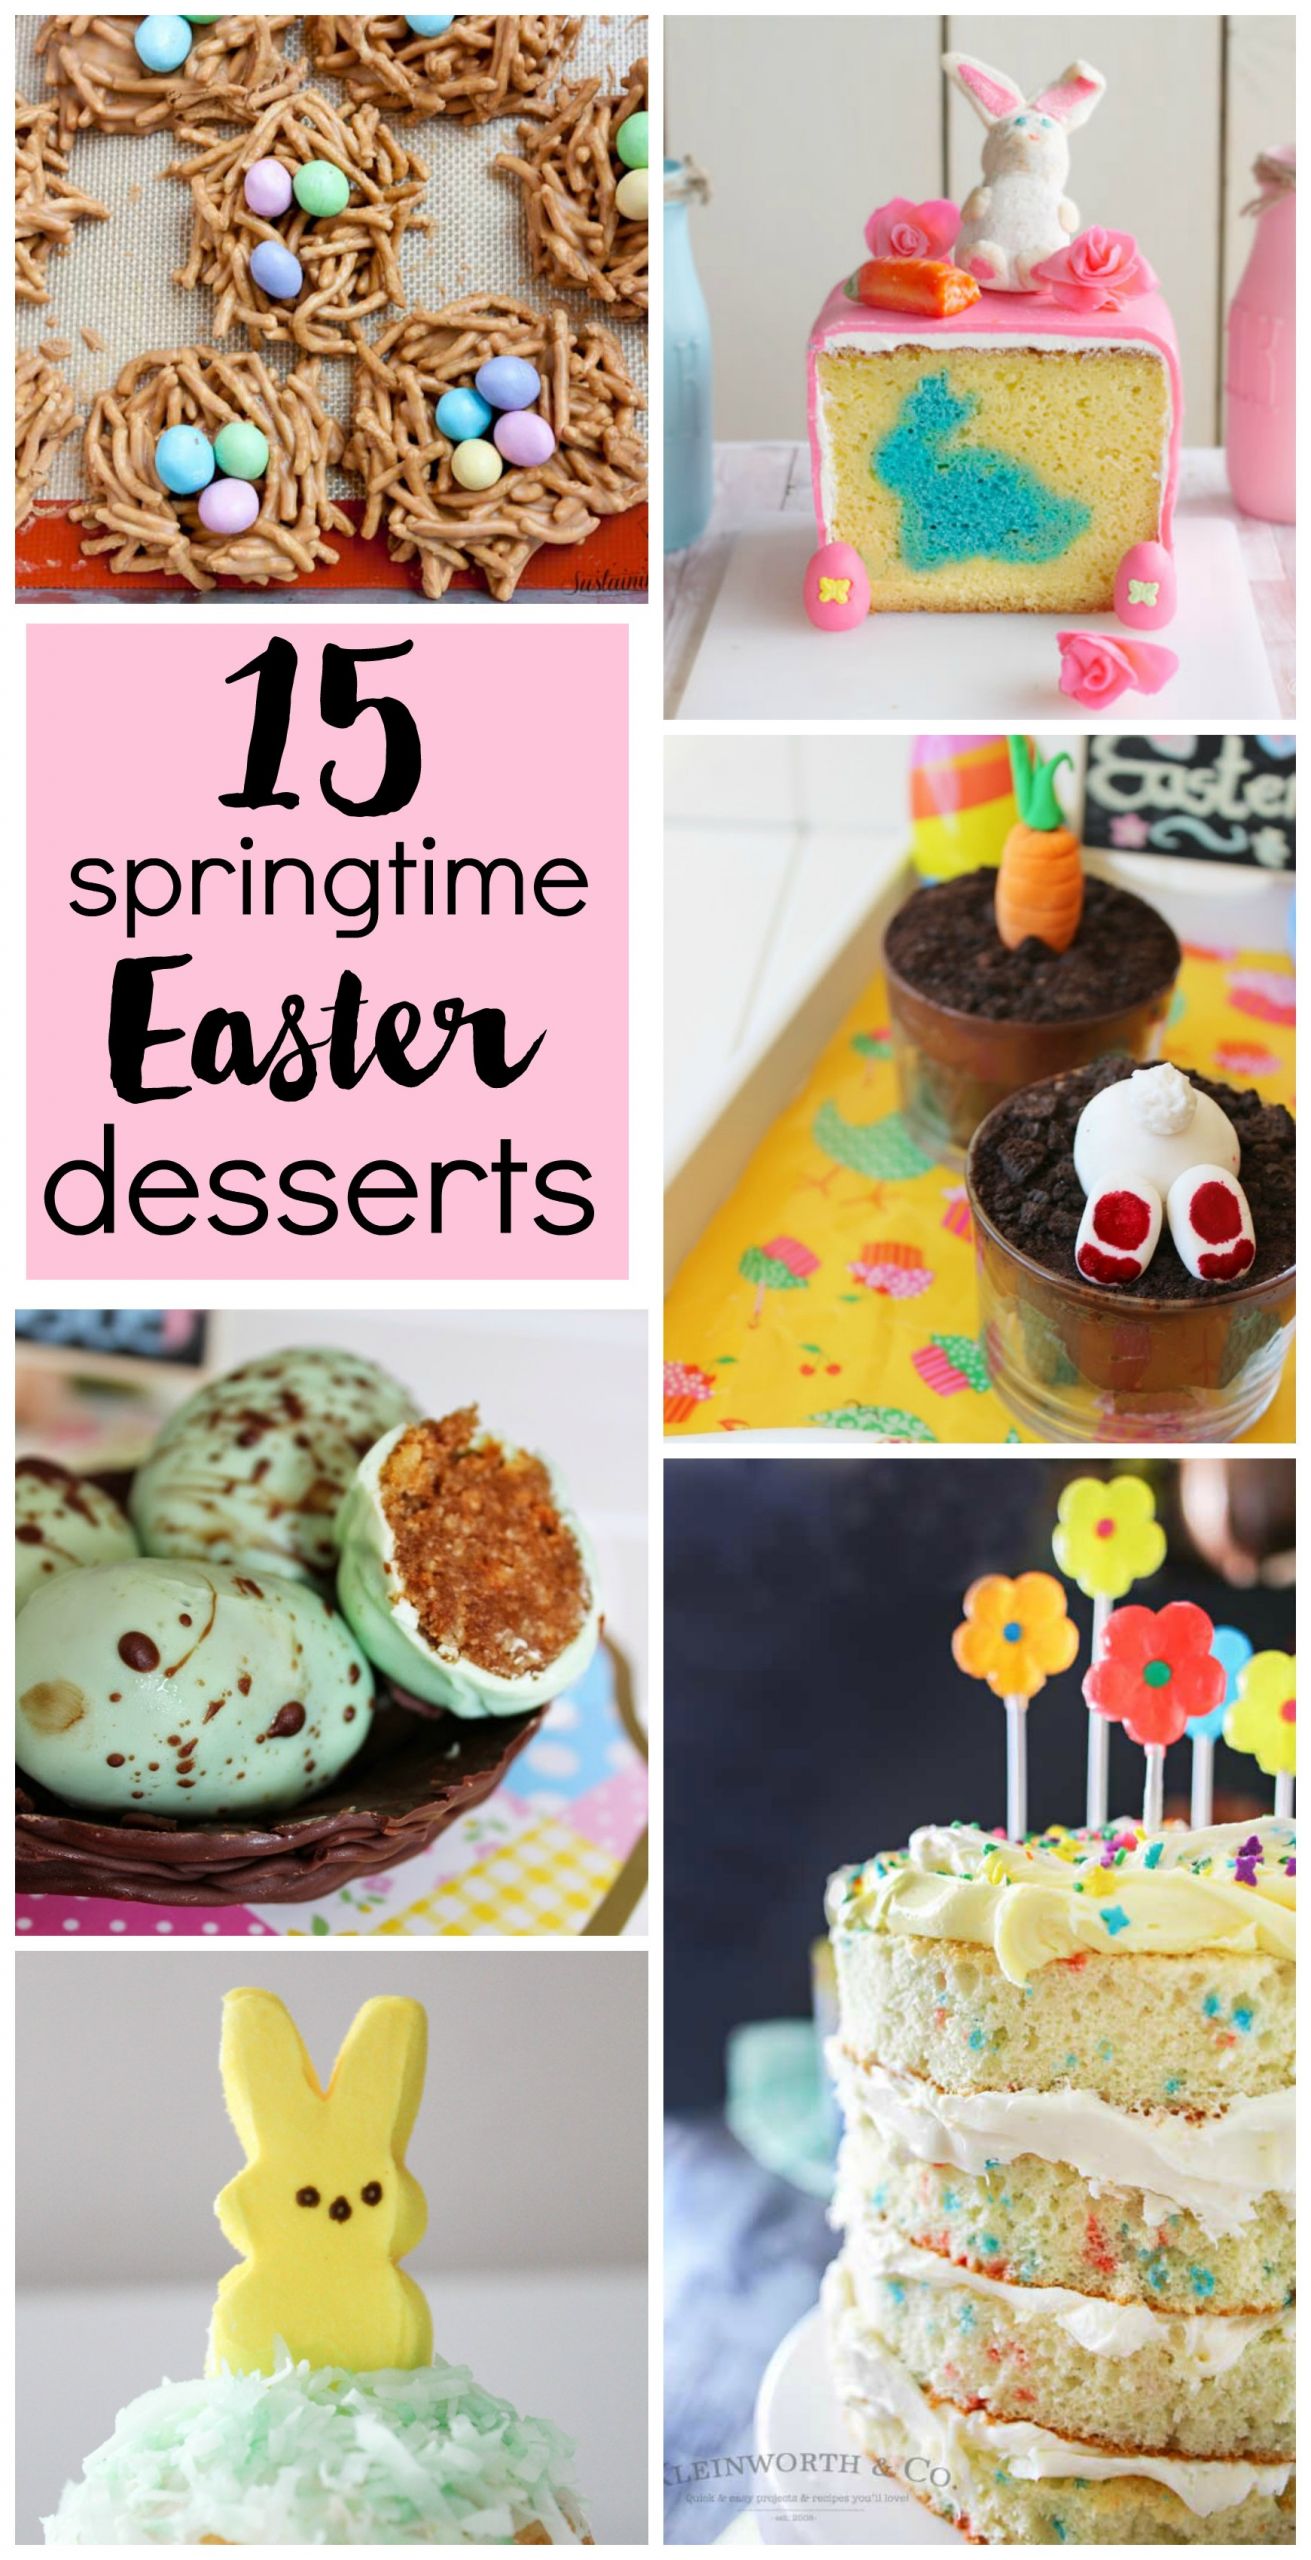 Pinterest Easter Desserts
 15 Springtime Easter Desserts A Savory Feast